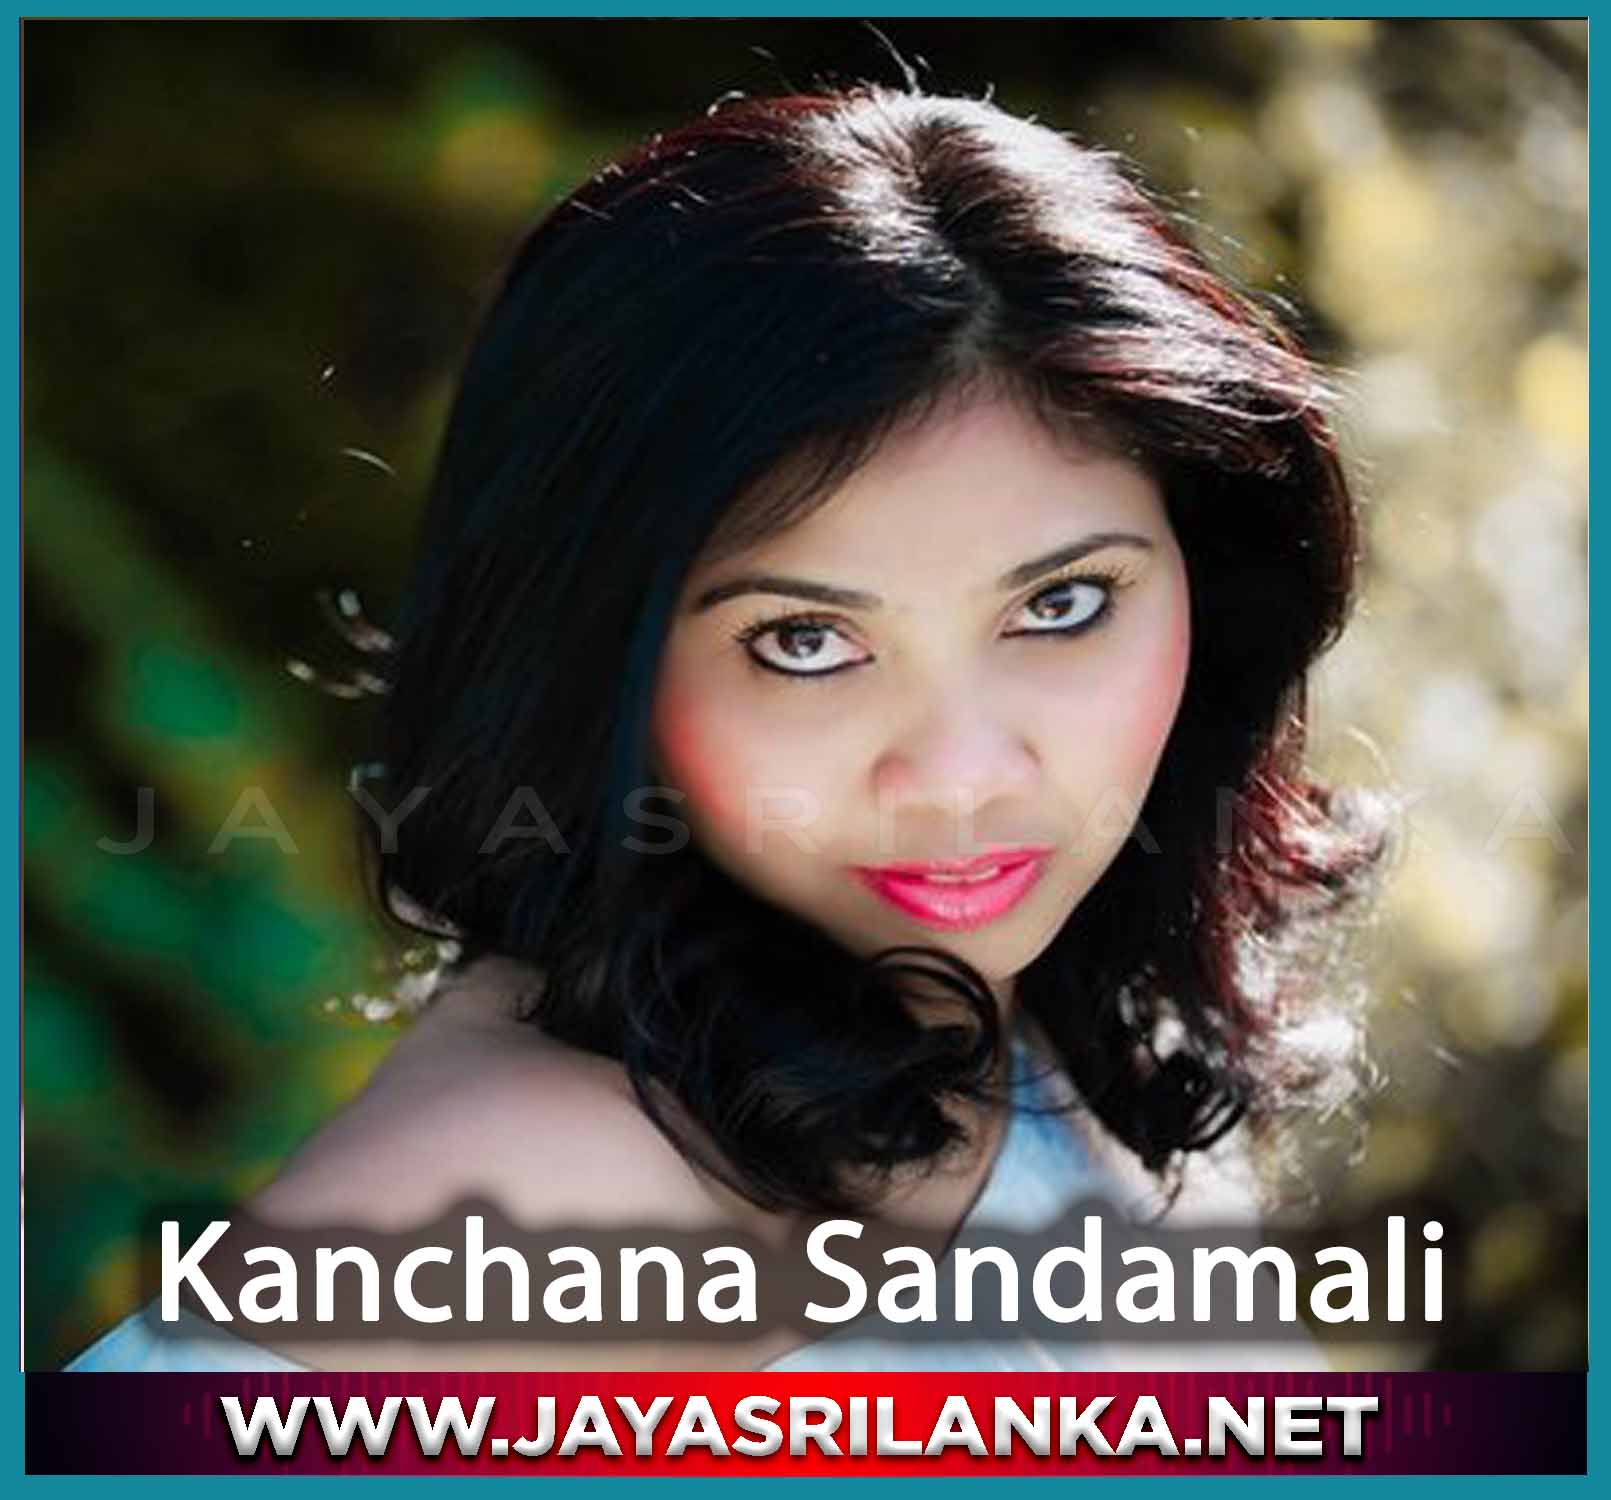 Sanda Se Sandamaliye - Kanchana Sandamali mp3 Image